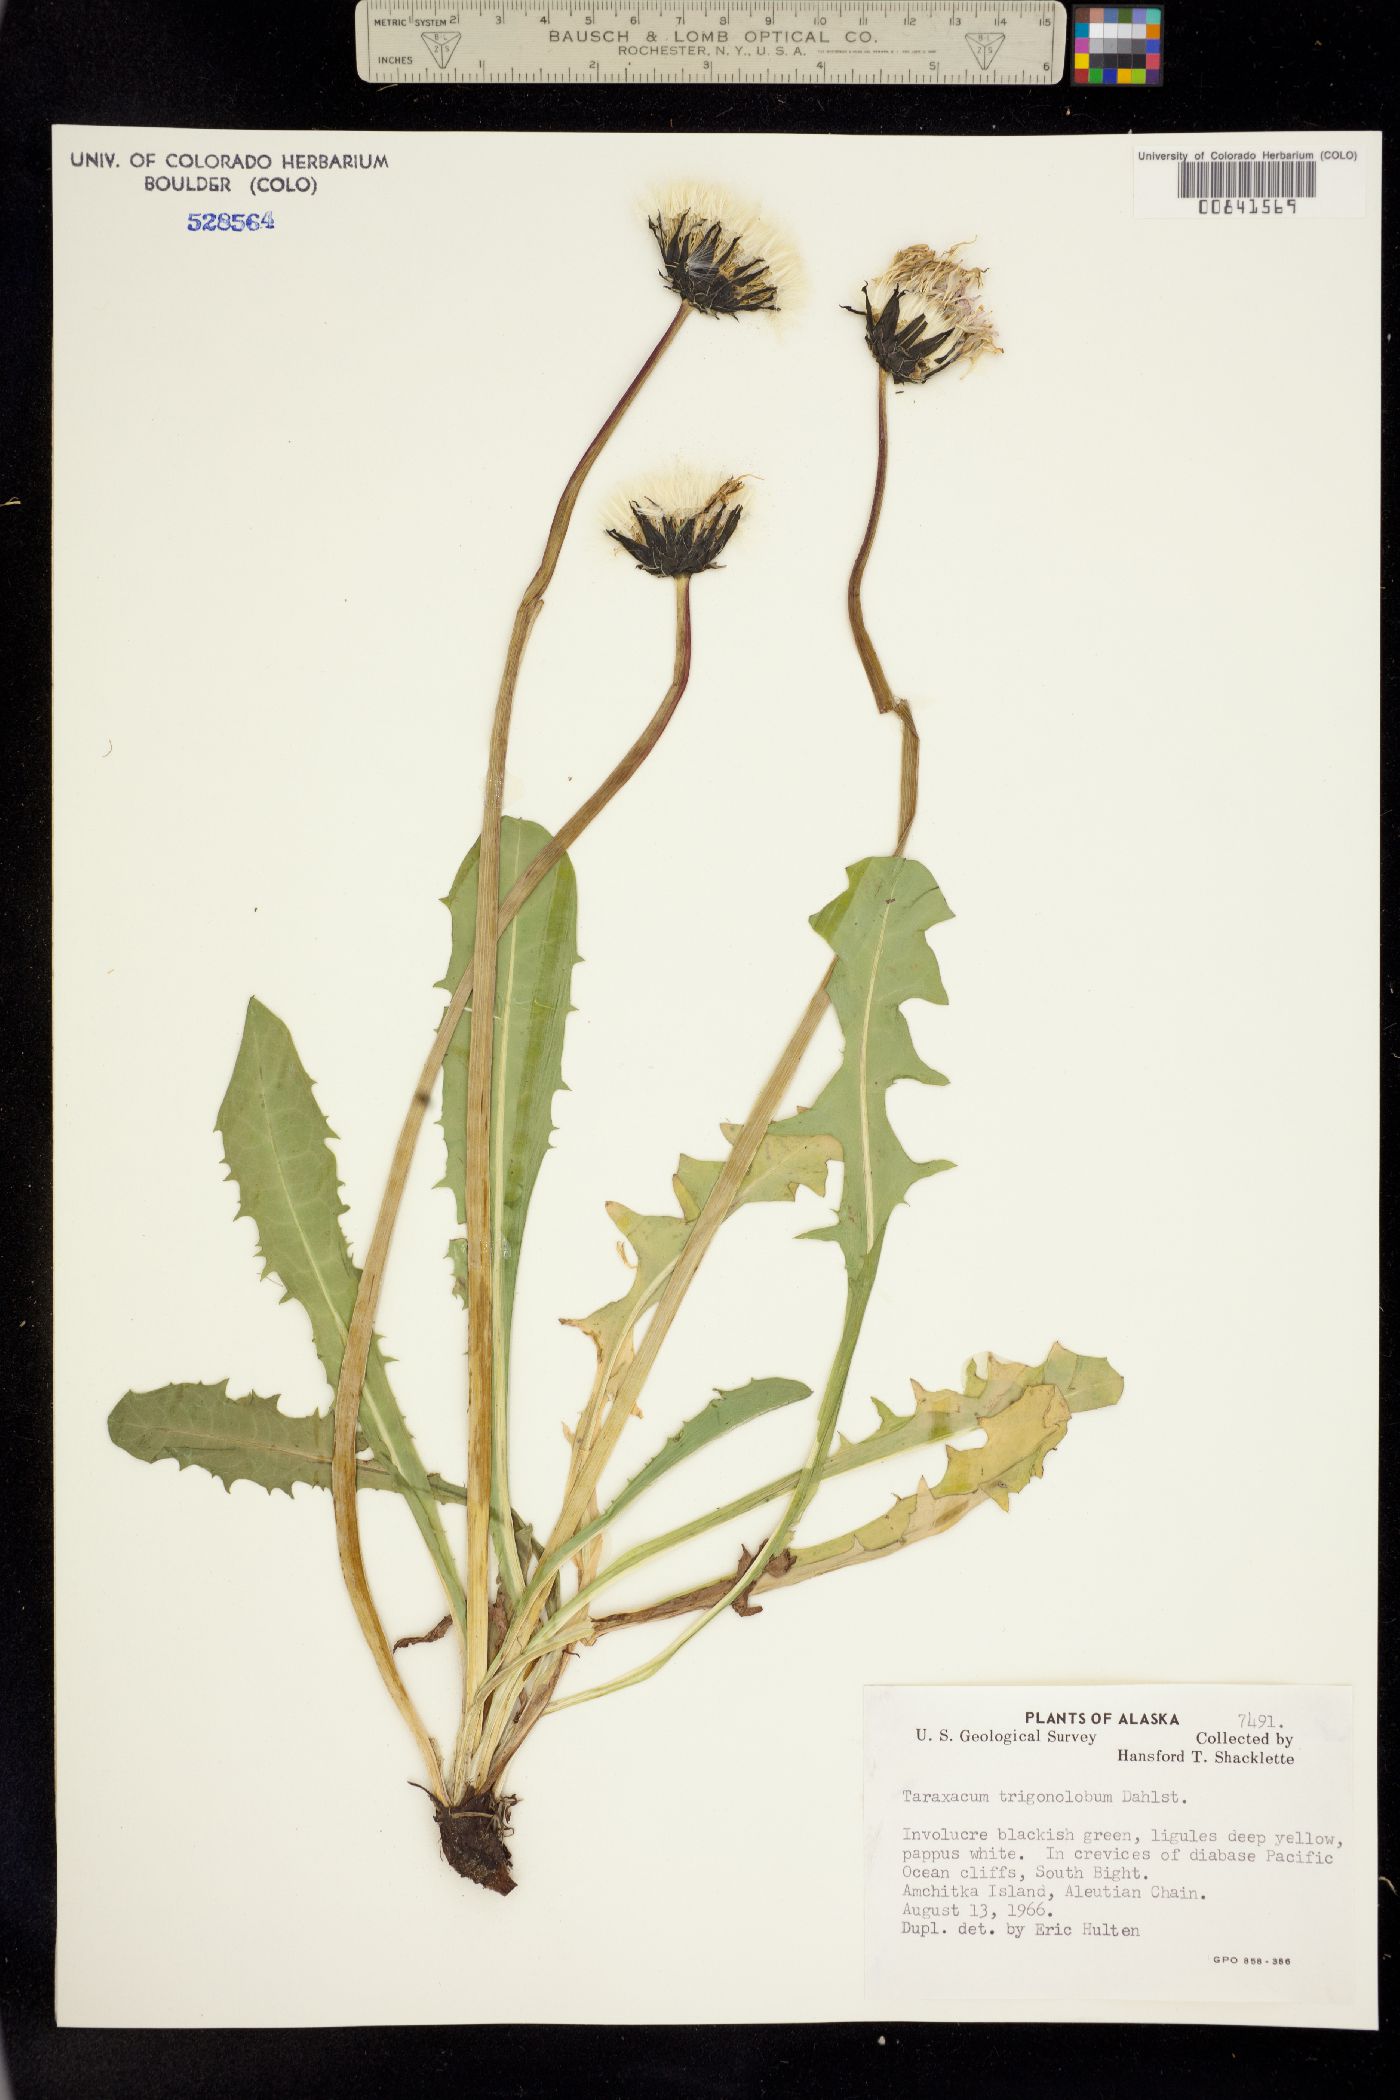 Taraxacum trigonolobum image